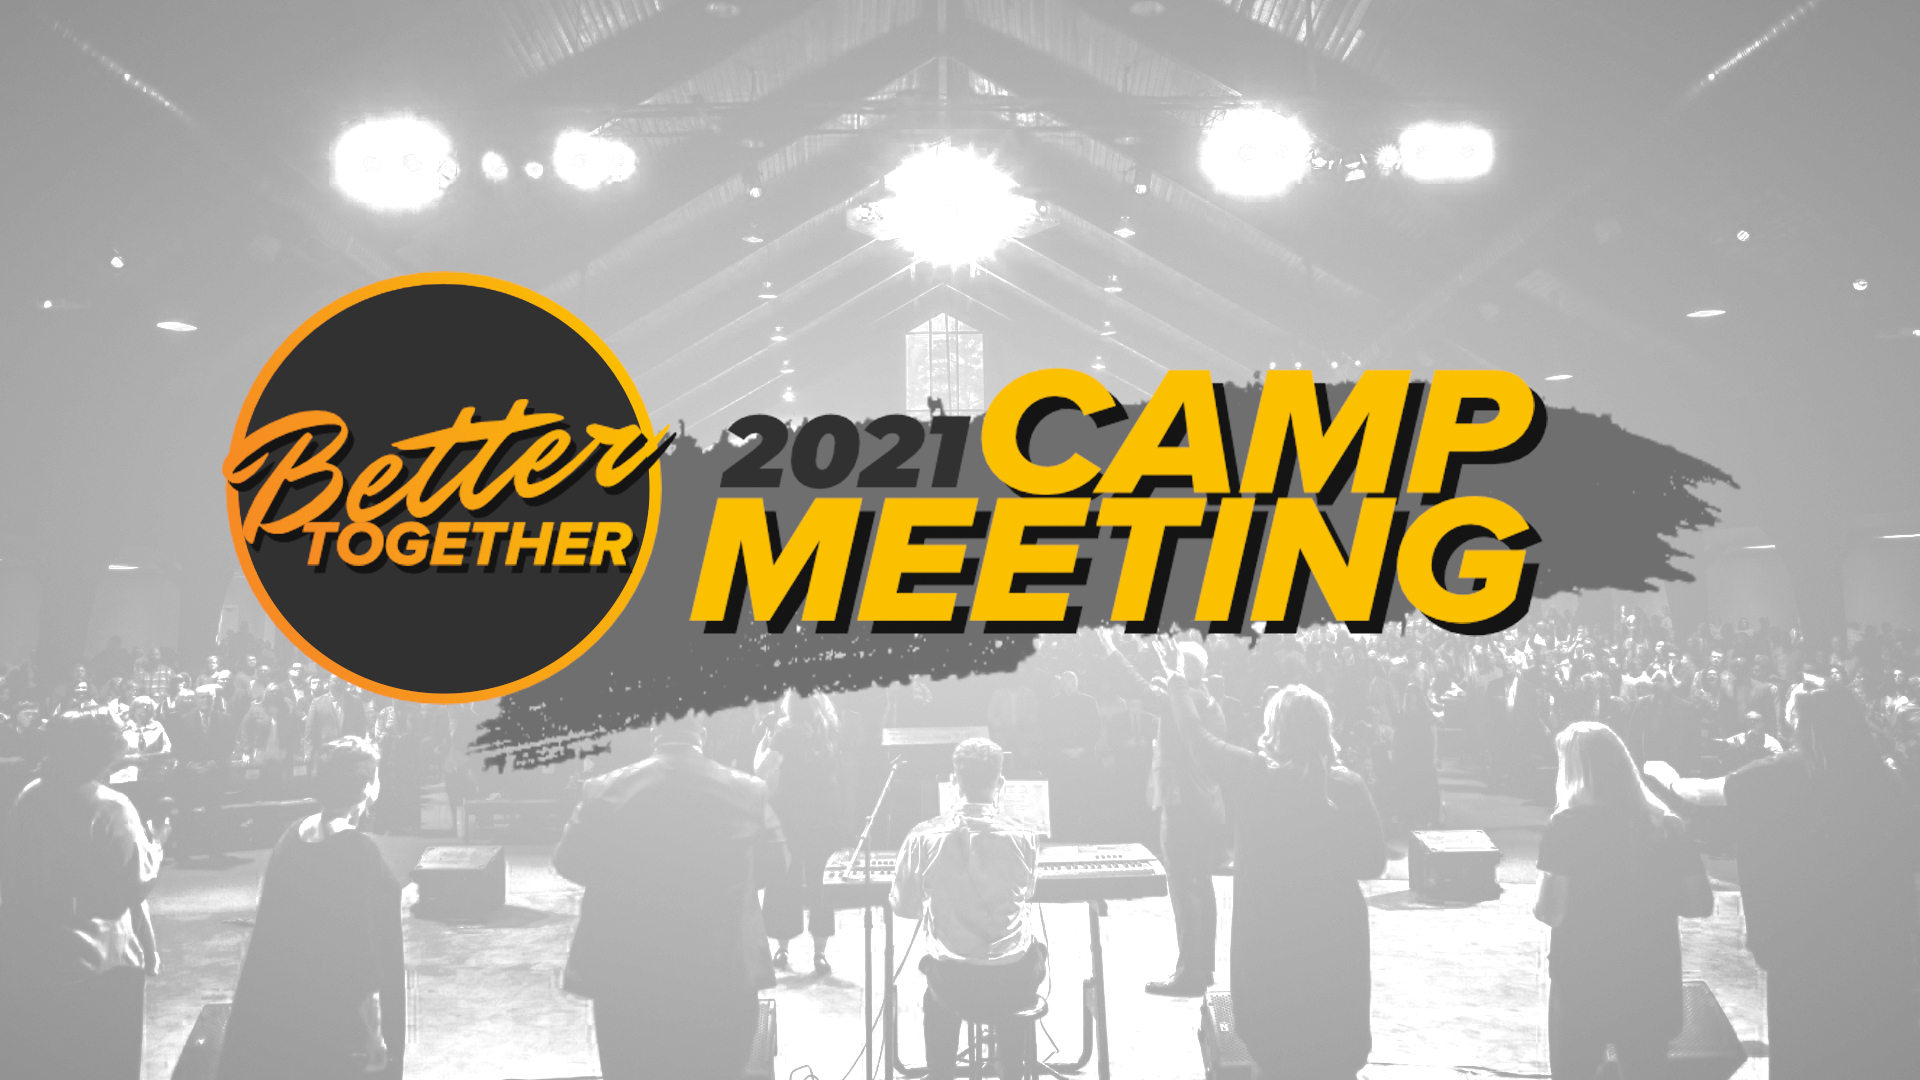 Camp Meeting 2021 South Church of Godof God